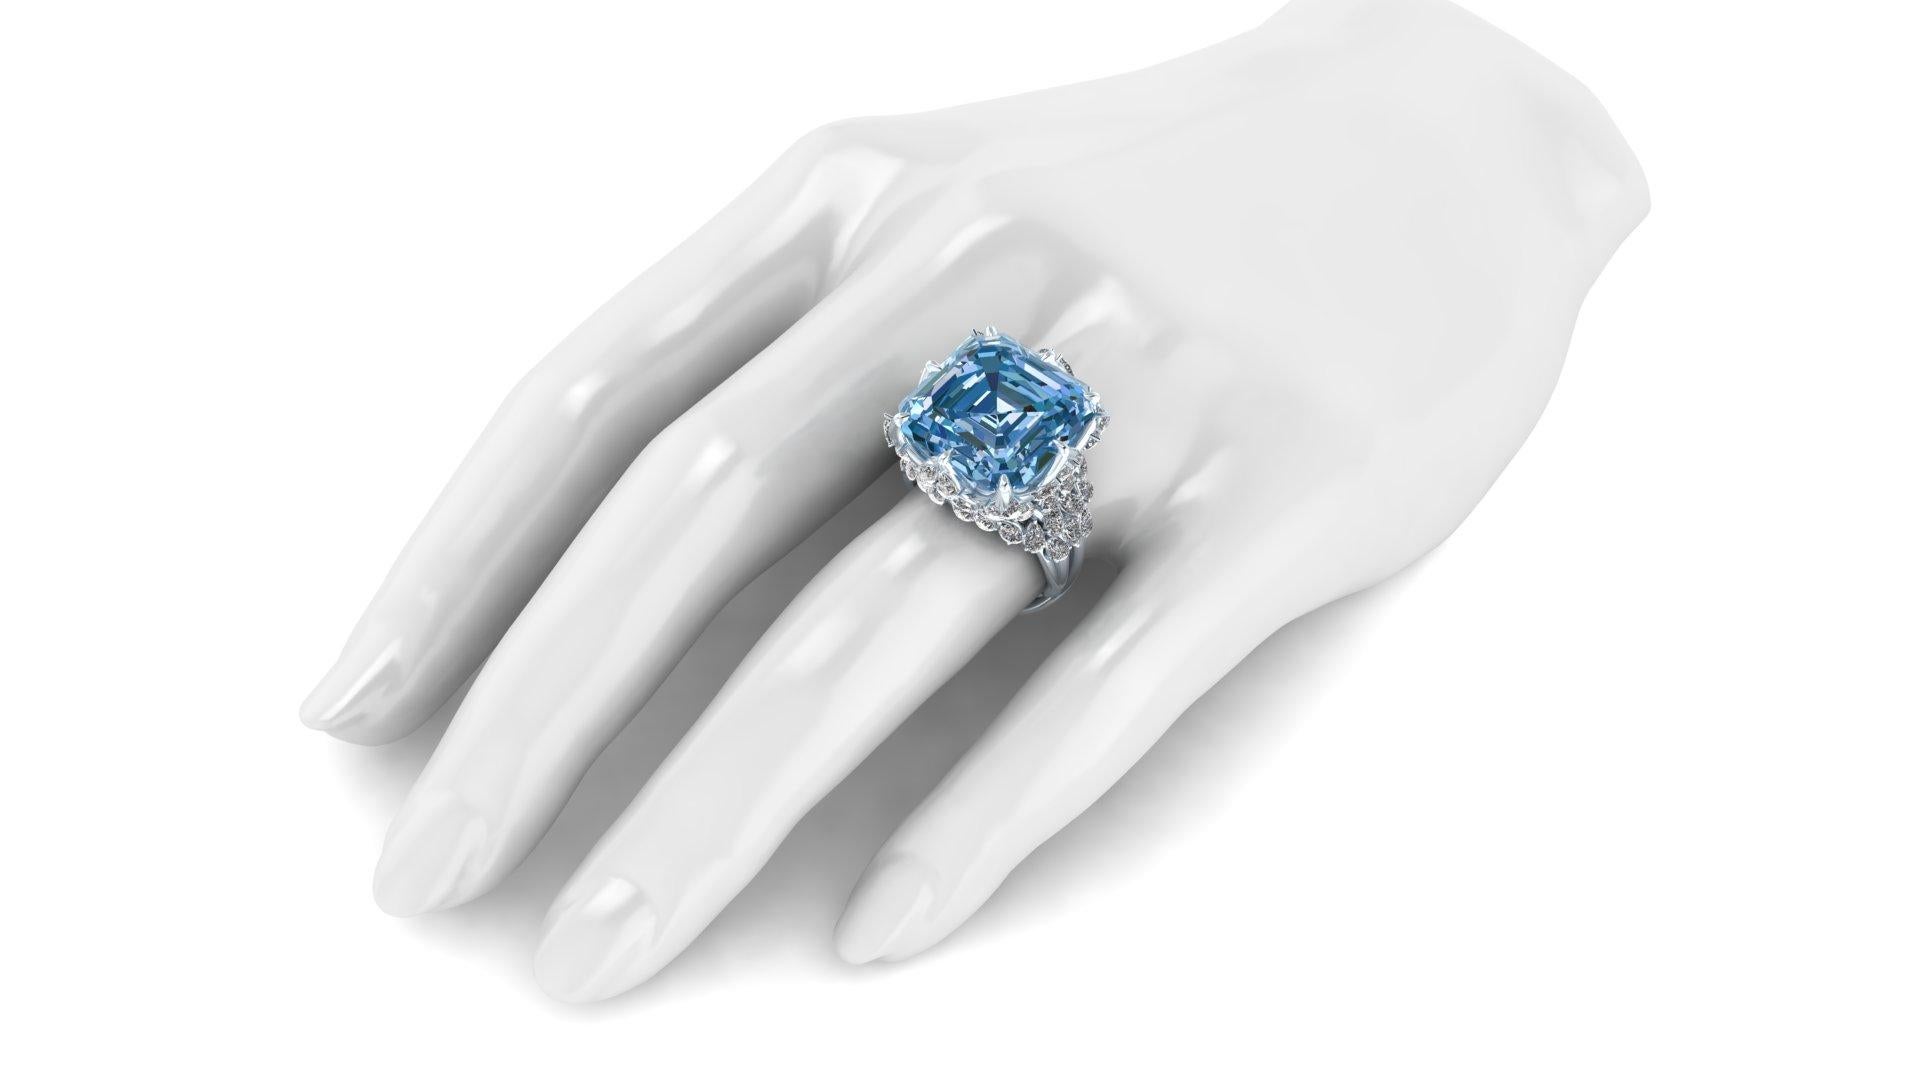 Art Nouveau FERRUCCI 23.88 Carat Intense Blue Aquamarine in 18k White Gold Diamond Ring For Sale